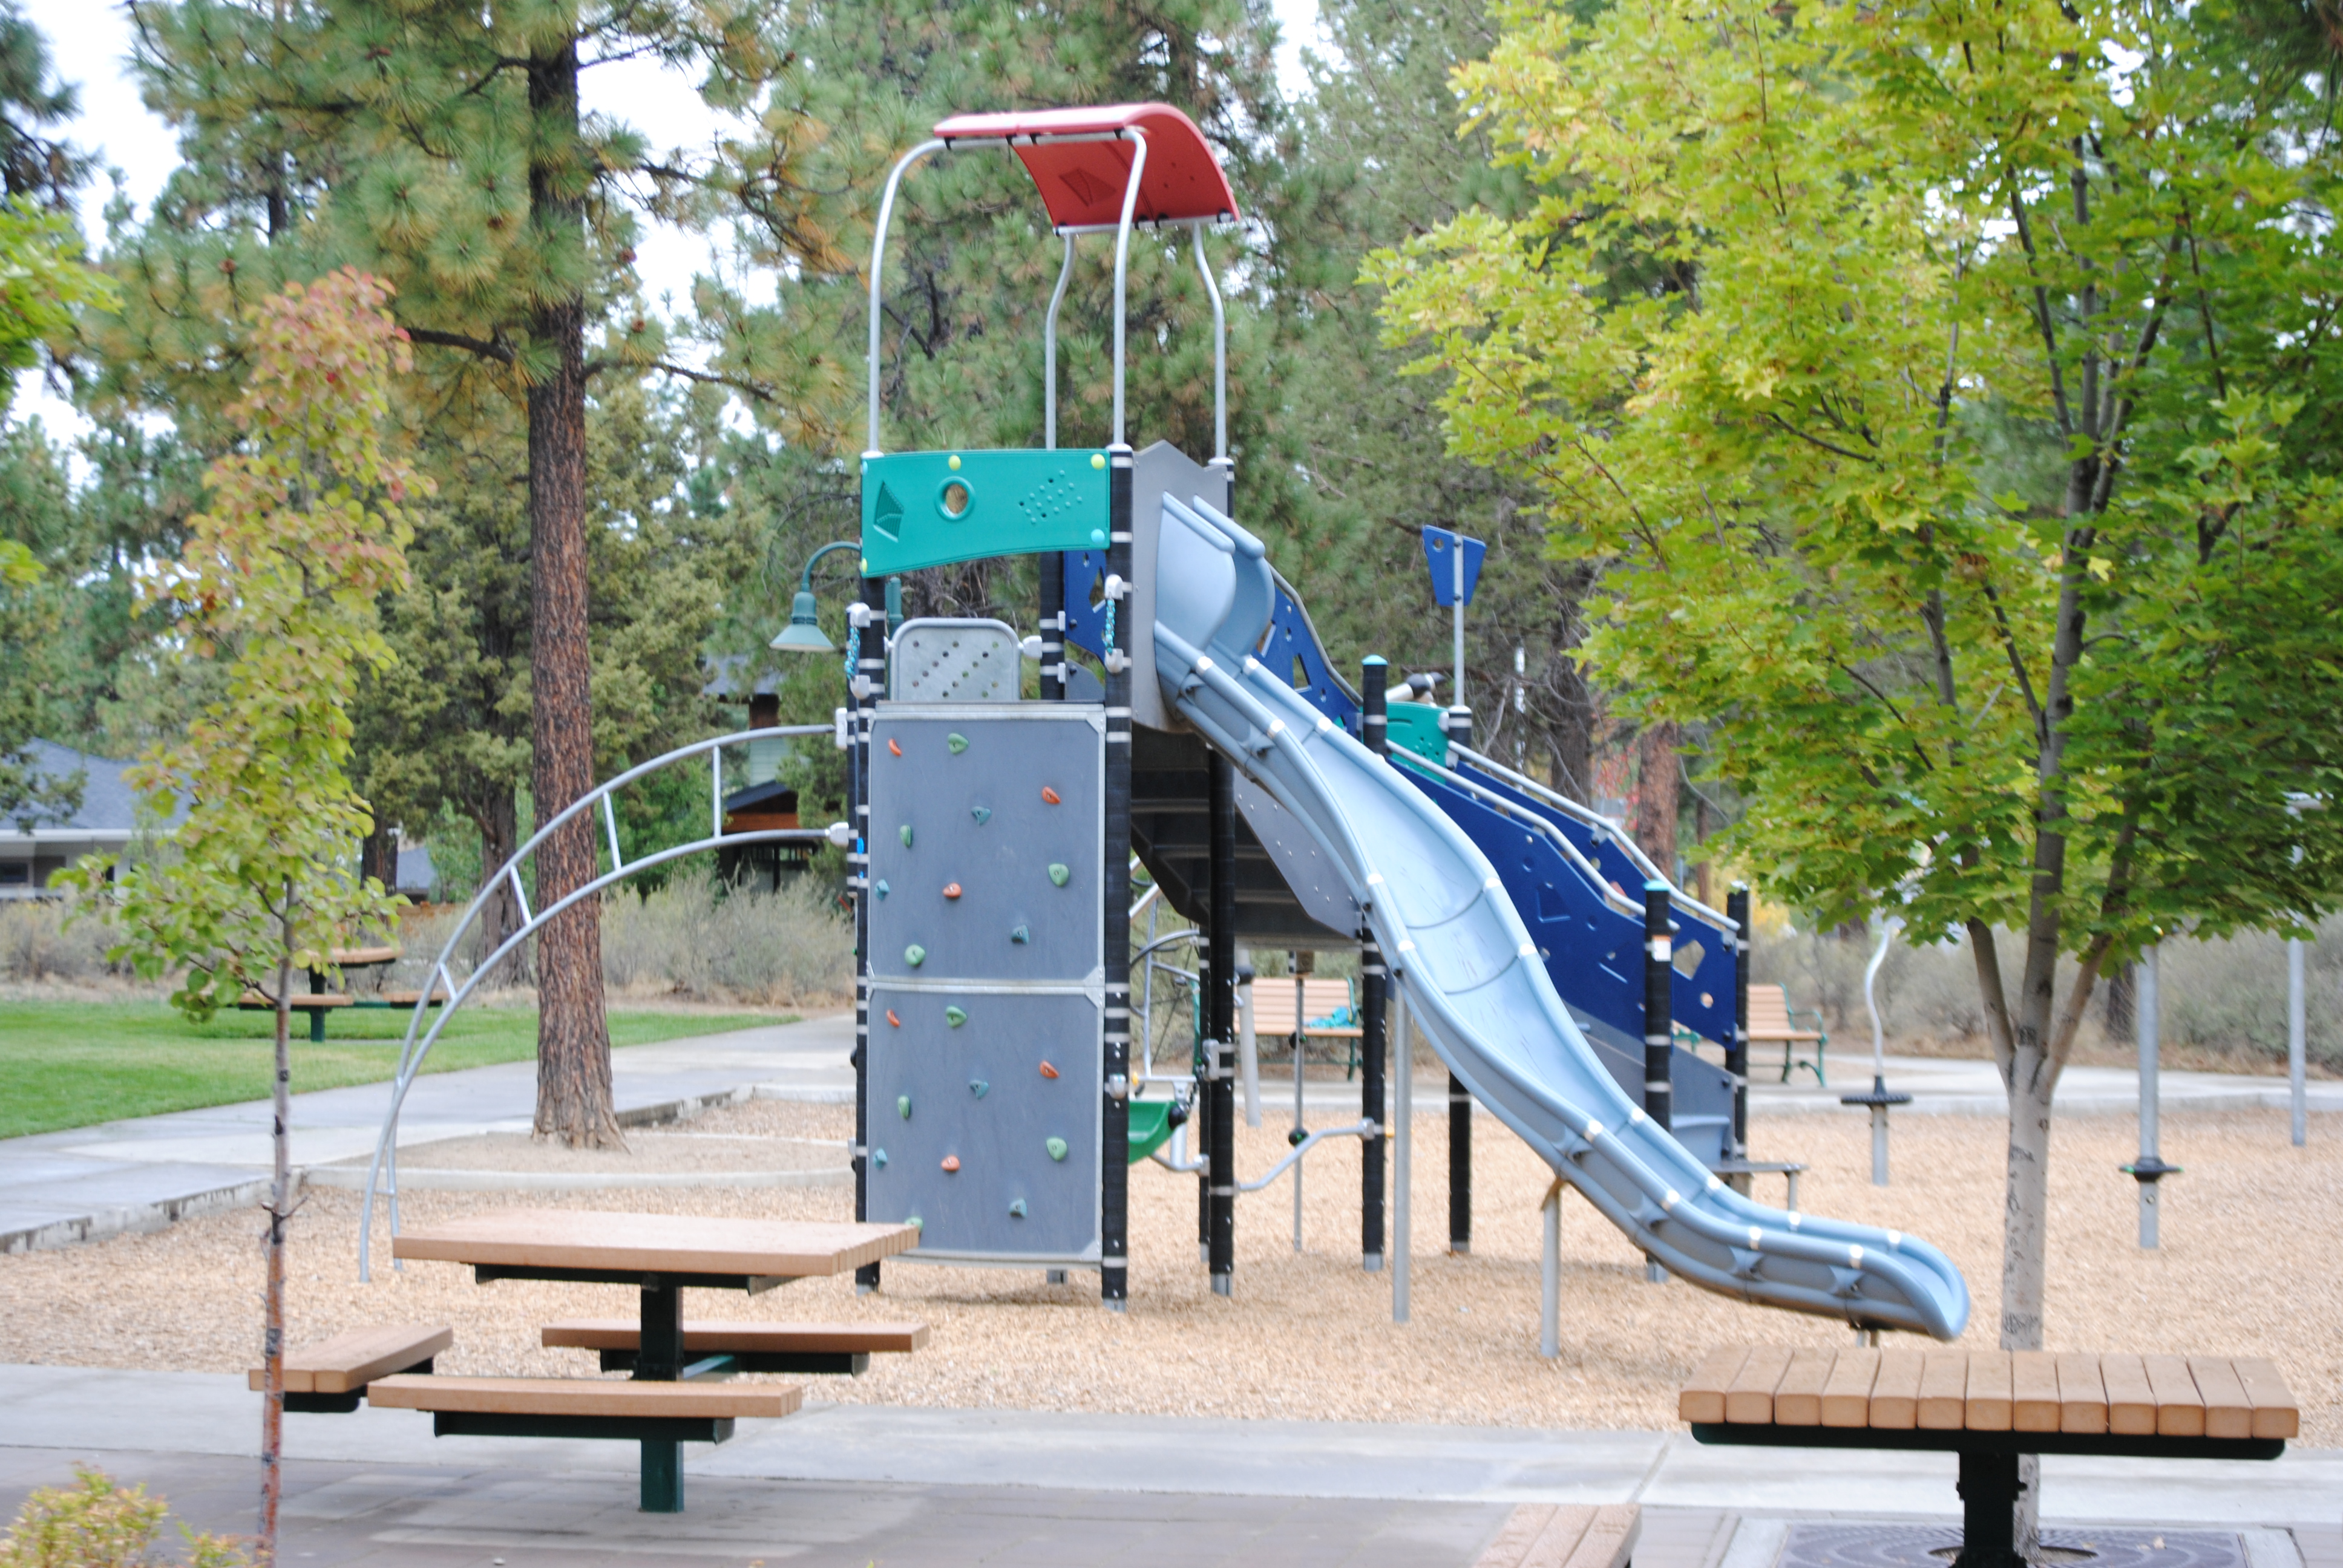 a slide at compass park